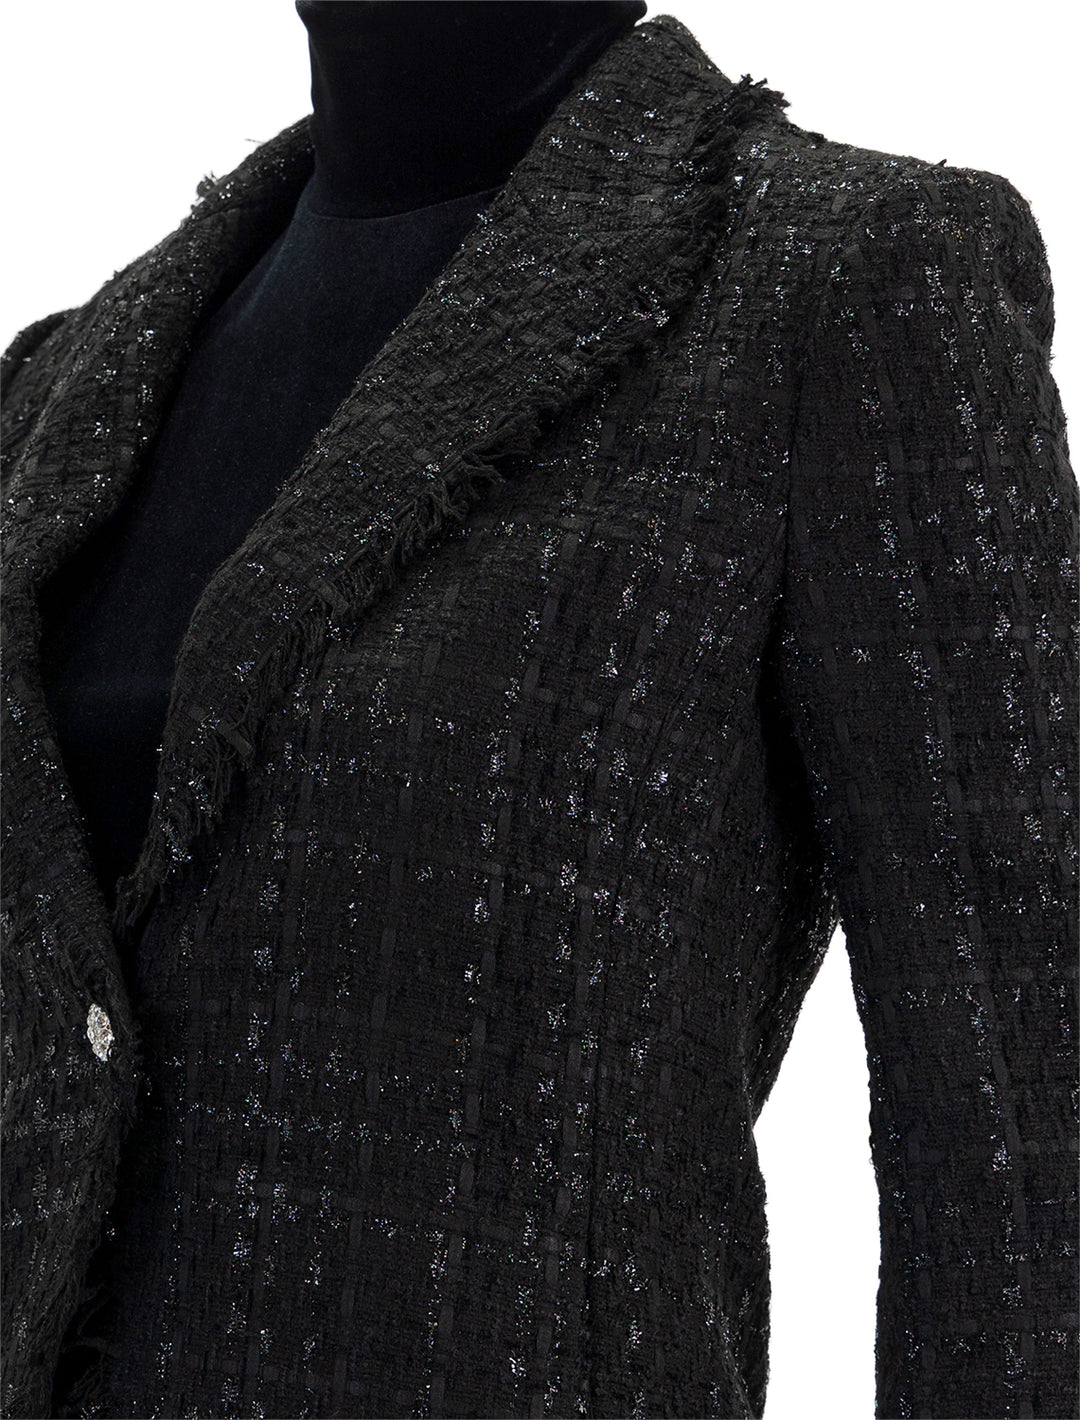 Close-up view of Derek Lam 10 Crosby's adelaide fringe bias jacket in black and silver.